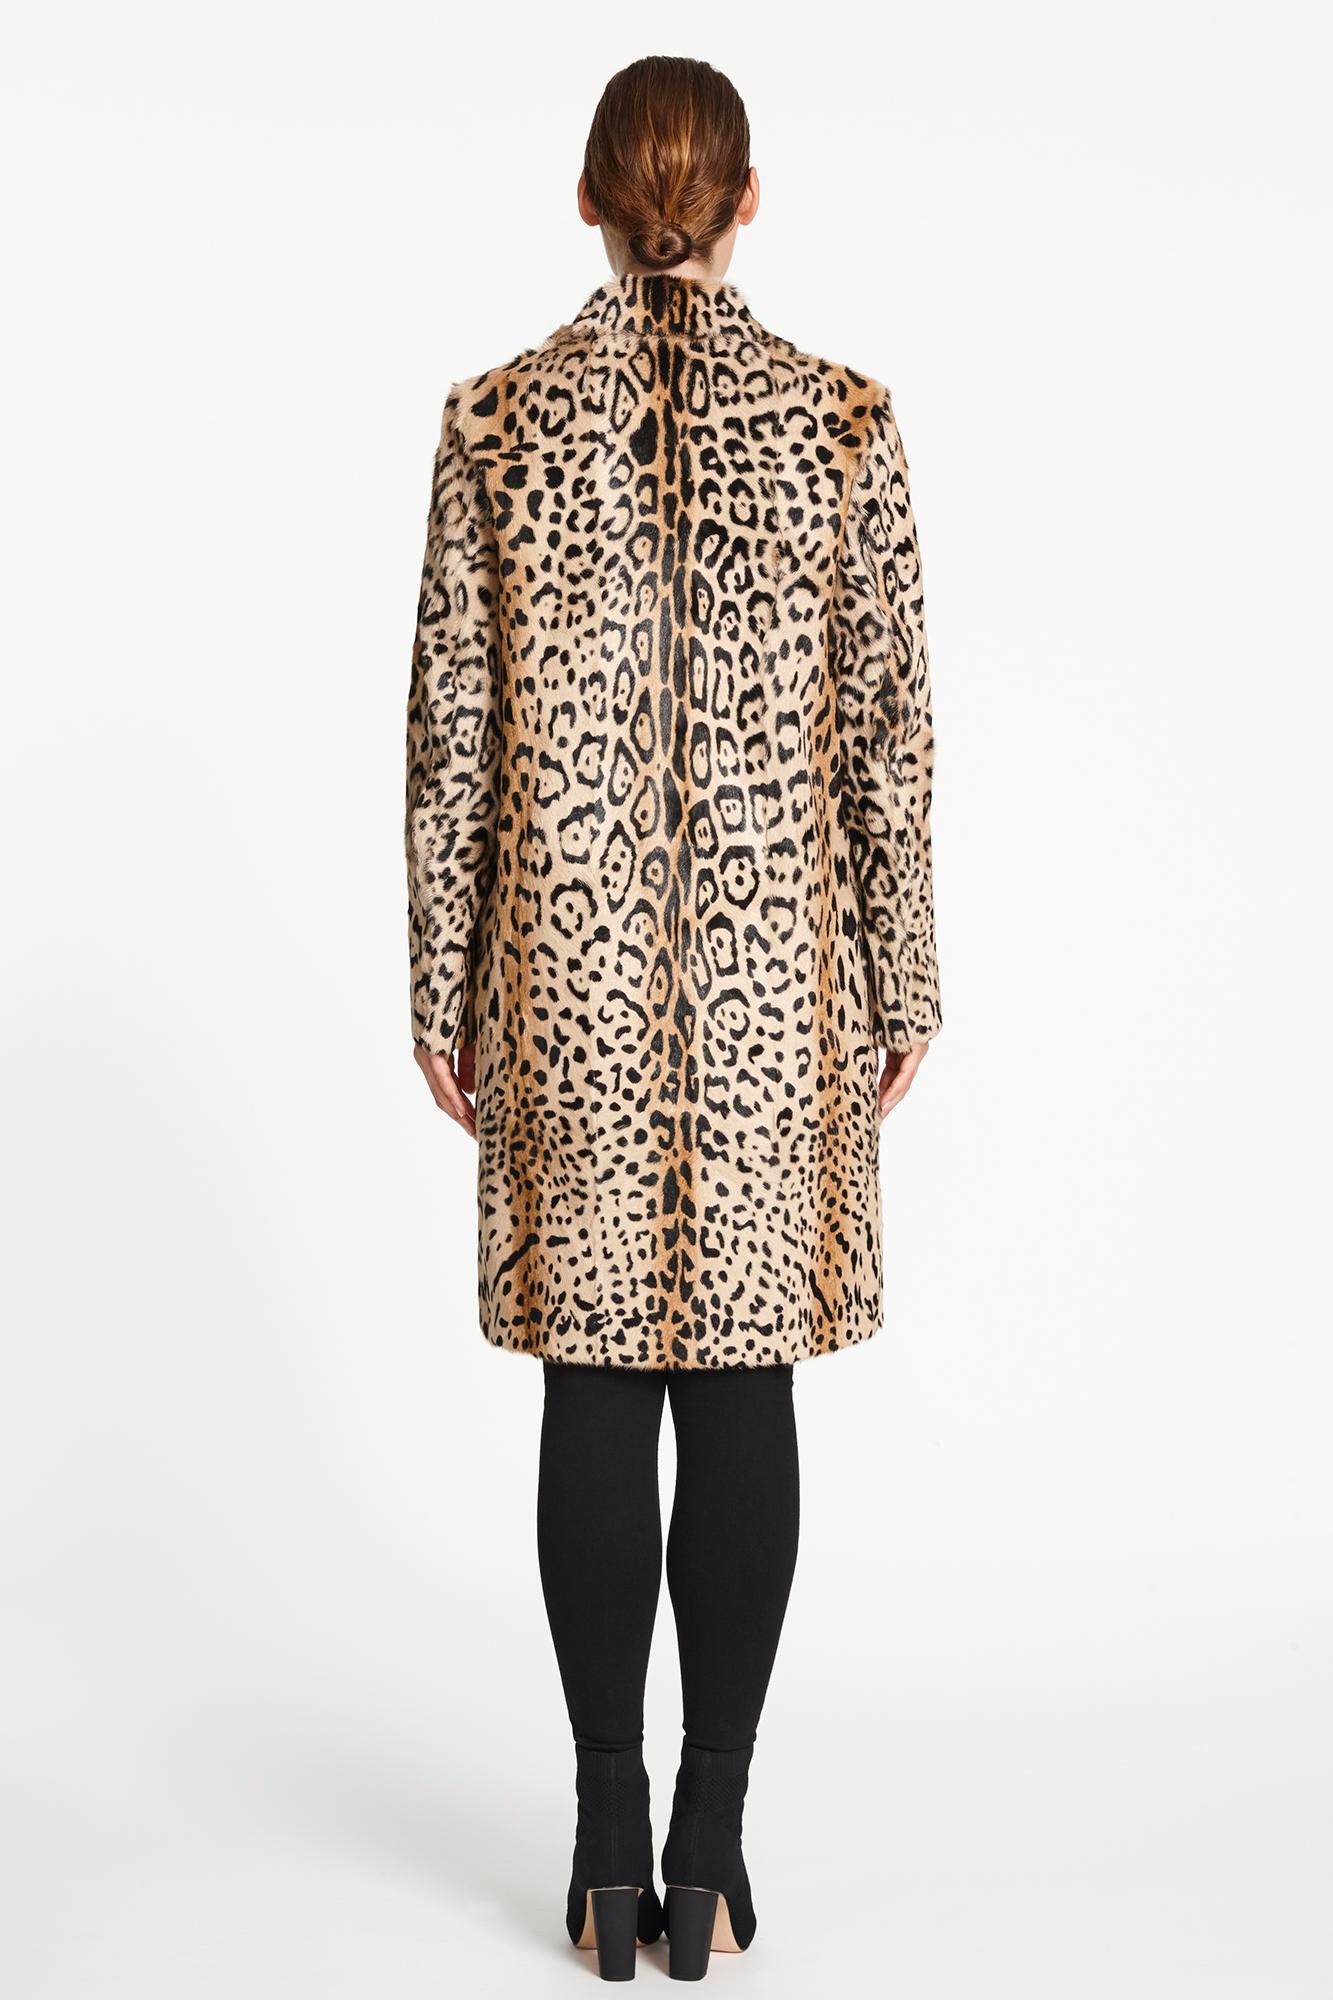 Verheyen London Leopard Print Coat in Red Ruby Goat Hair Fur UK 12  - Brand New  5